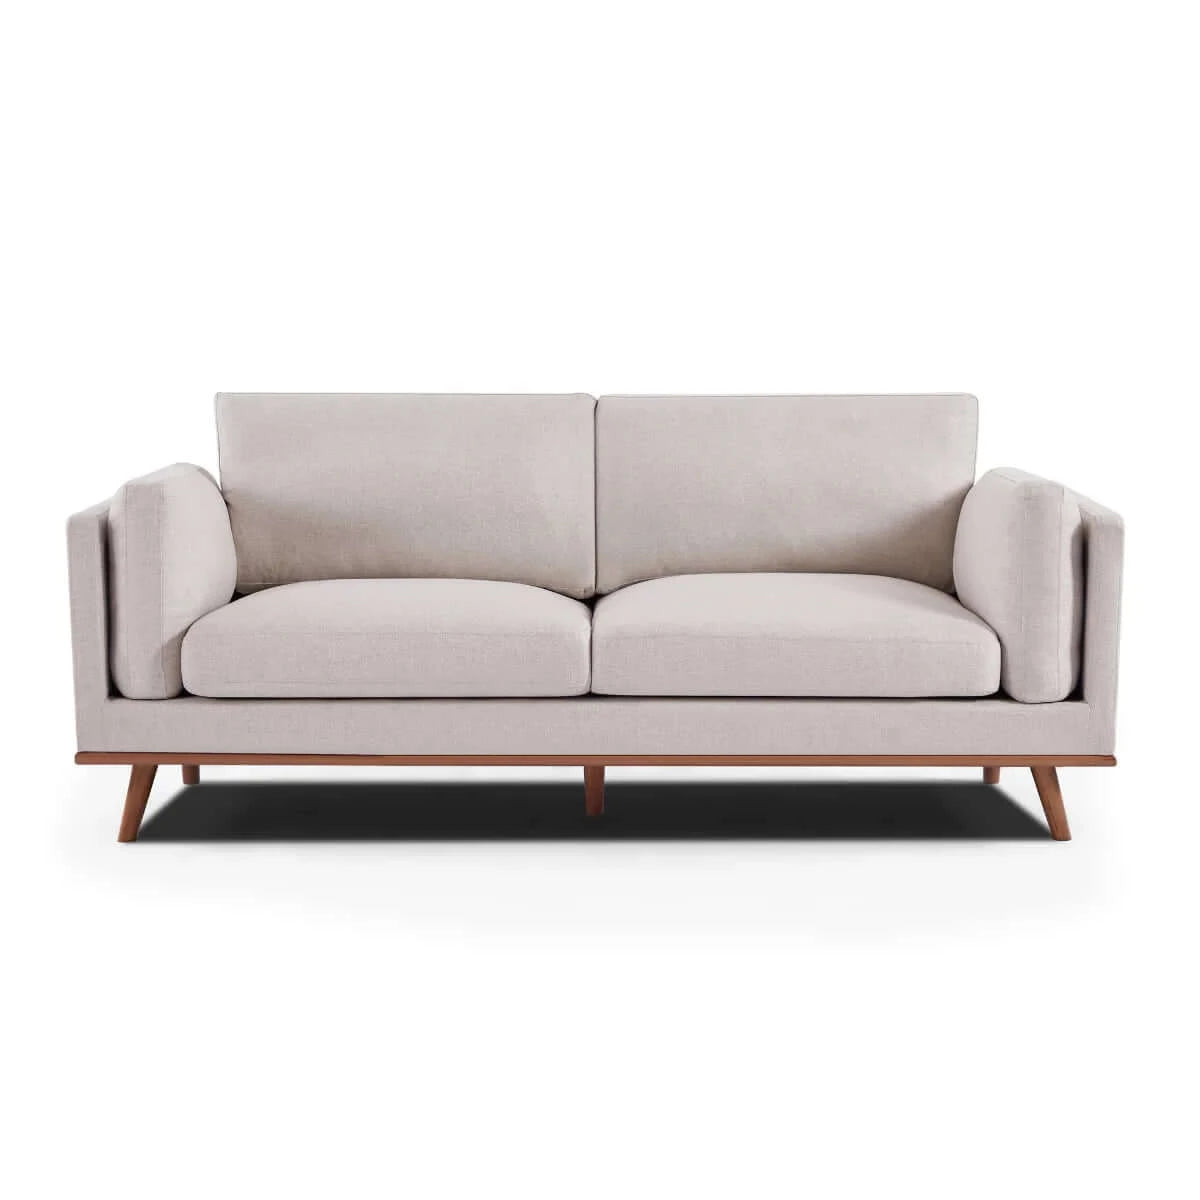 Buy wesley grey 3 seater sofa - upinteriors-Upinteriors